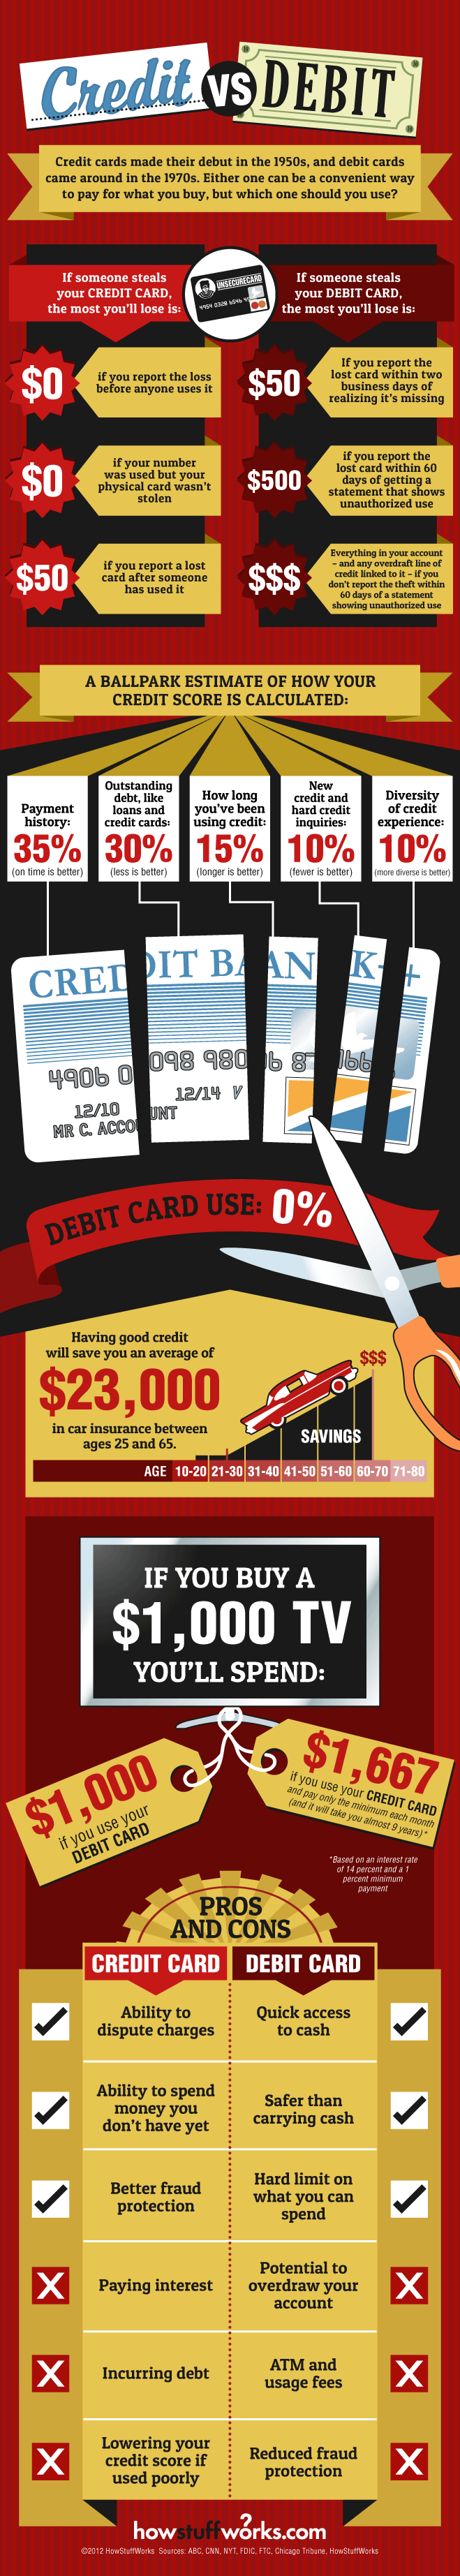 Credit vs. Debit